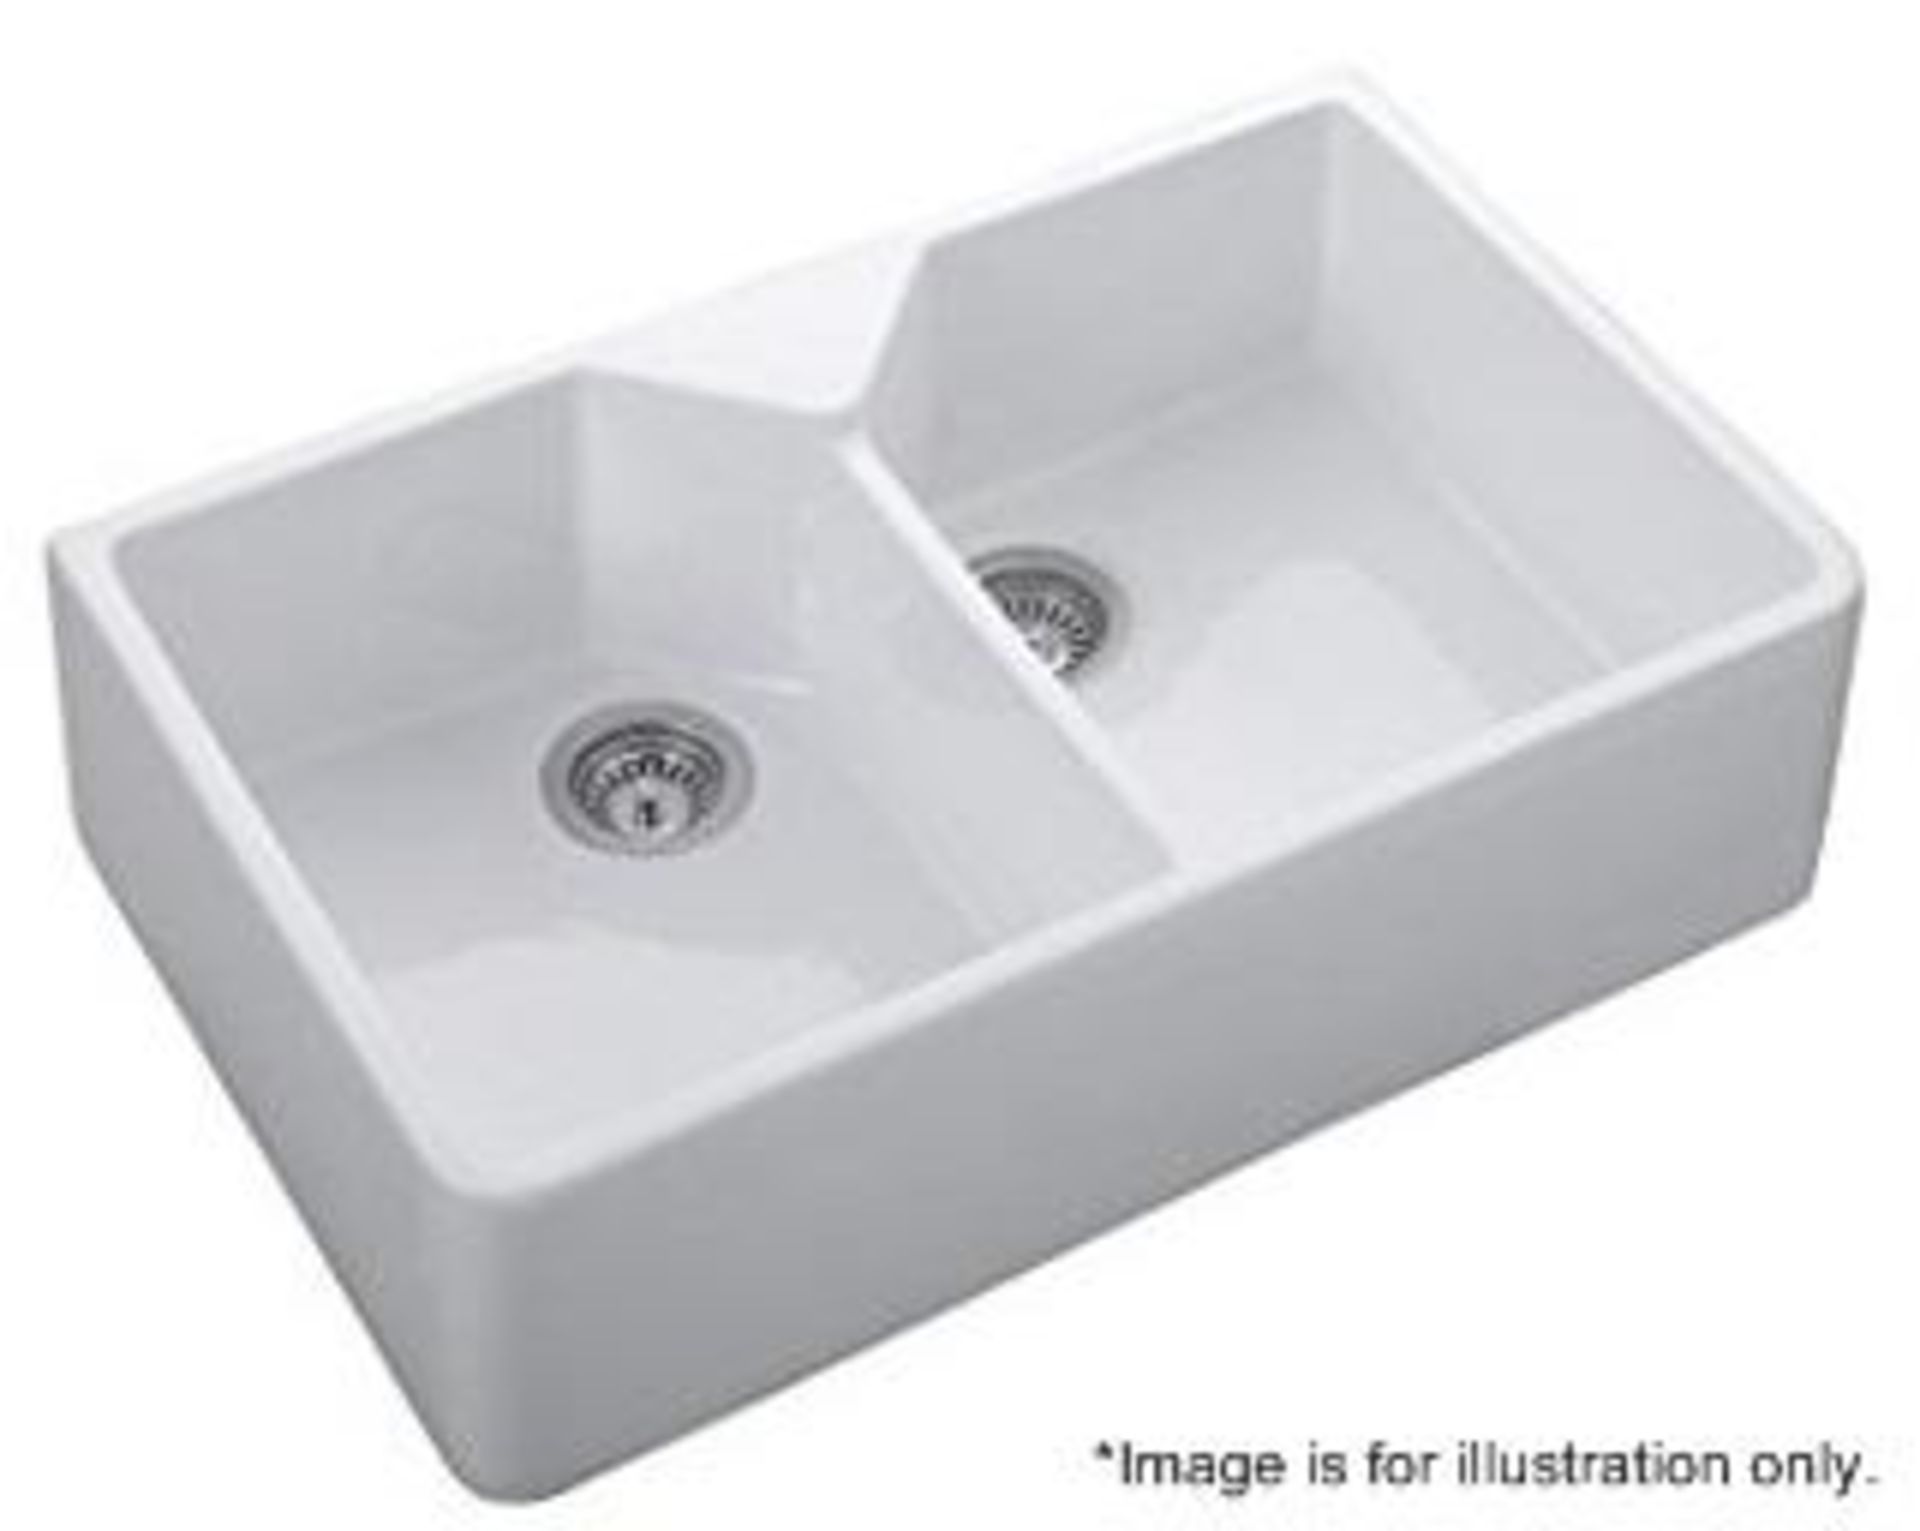 1 x RAK Ceramics Gourmet Sink 10 2-Bowl White Ceramic Kitchen Sink - Dimensions: W80 x D50 x H22cm -